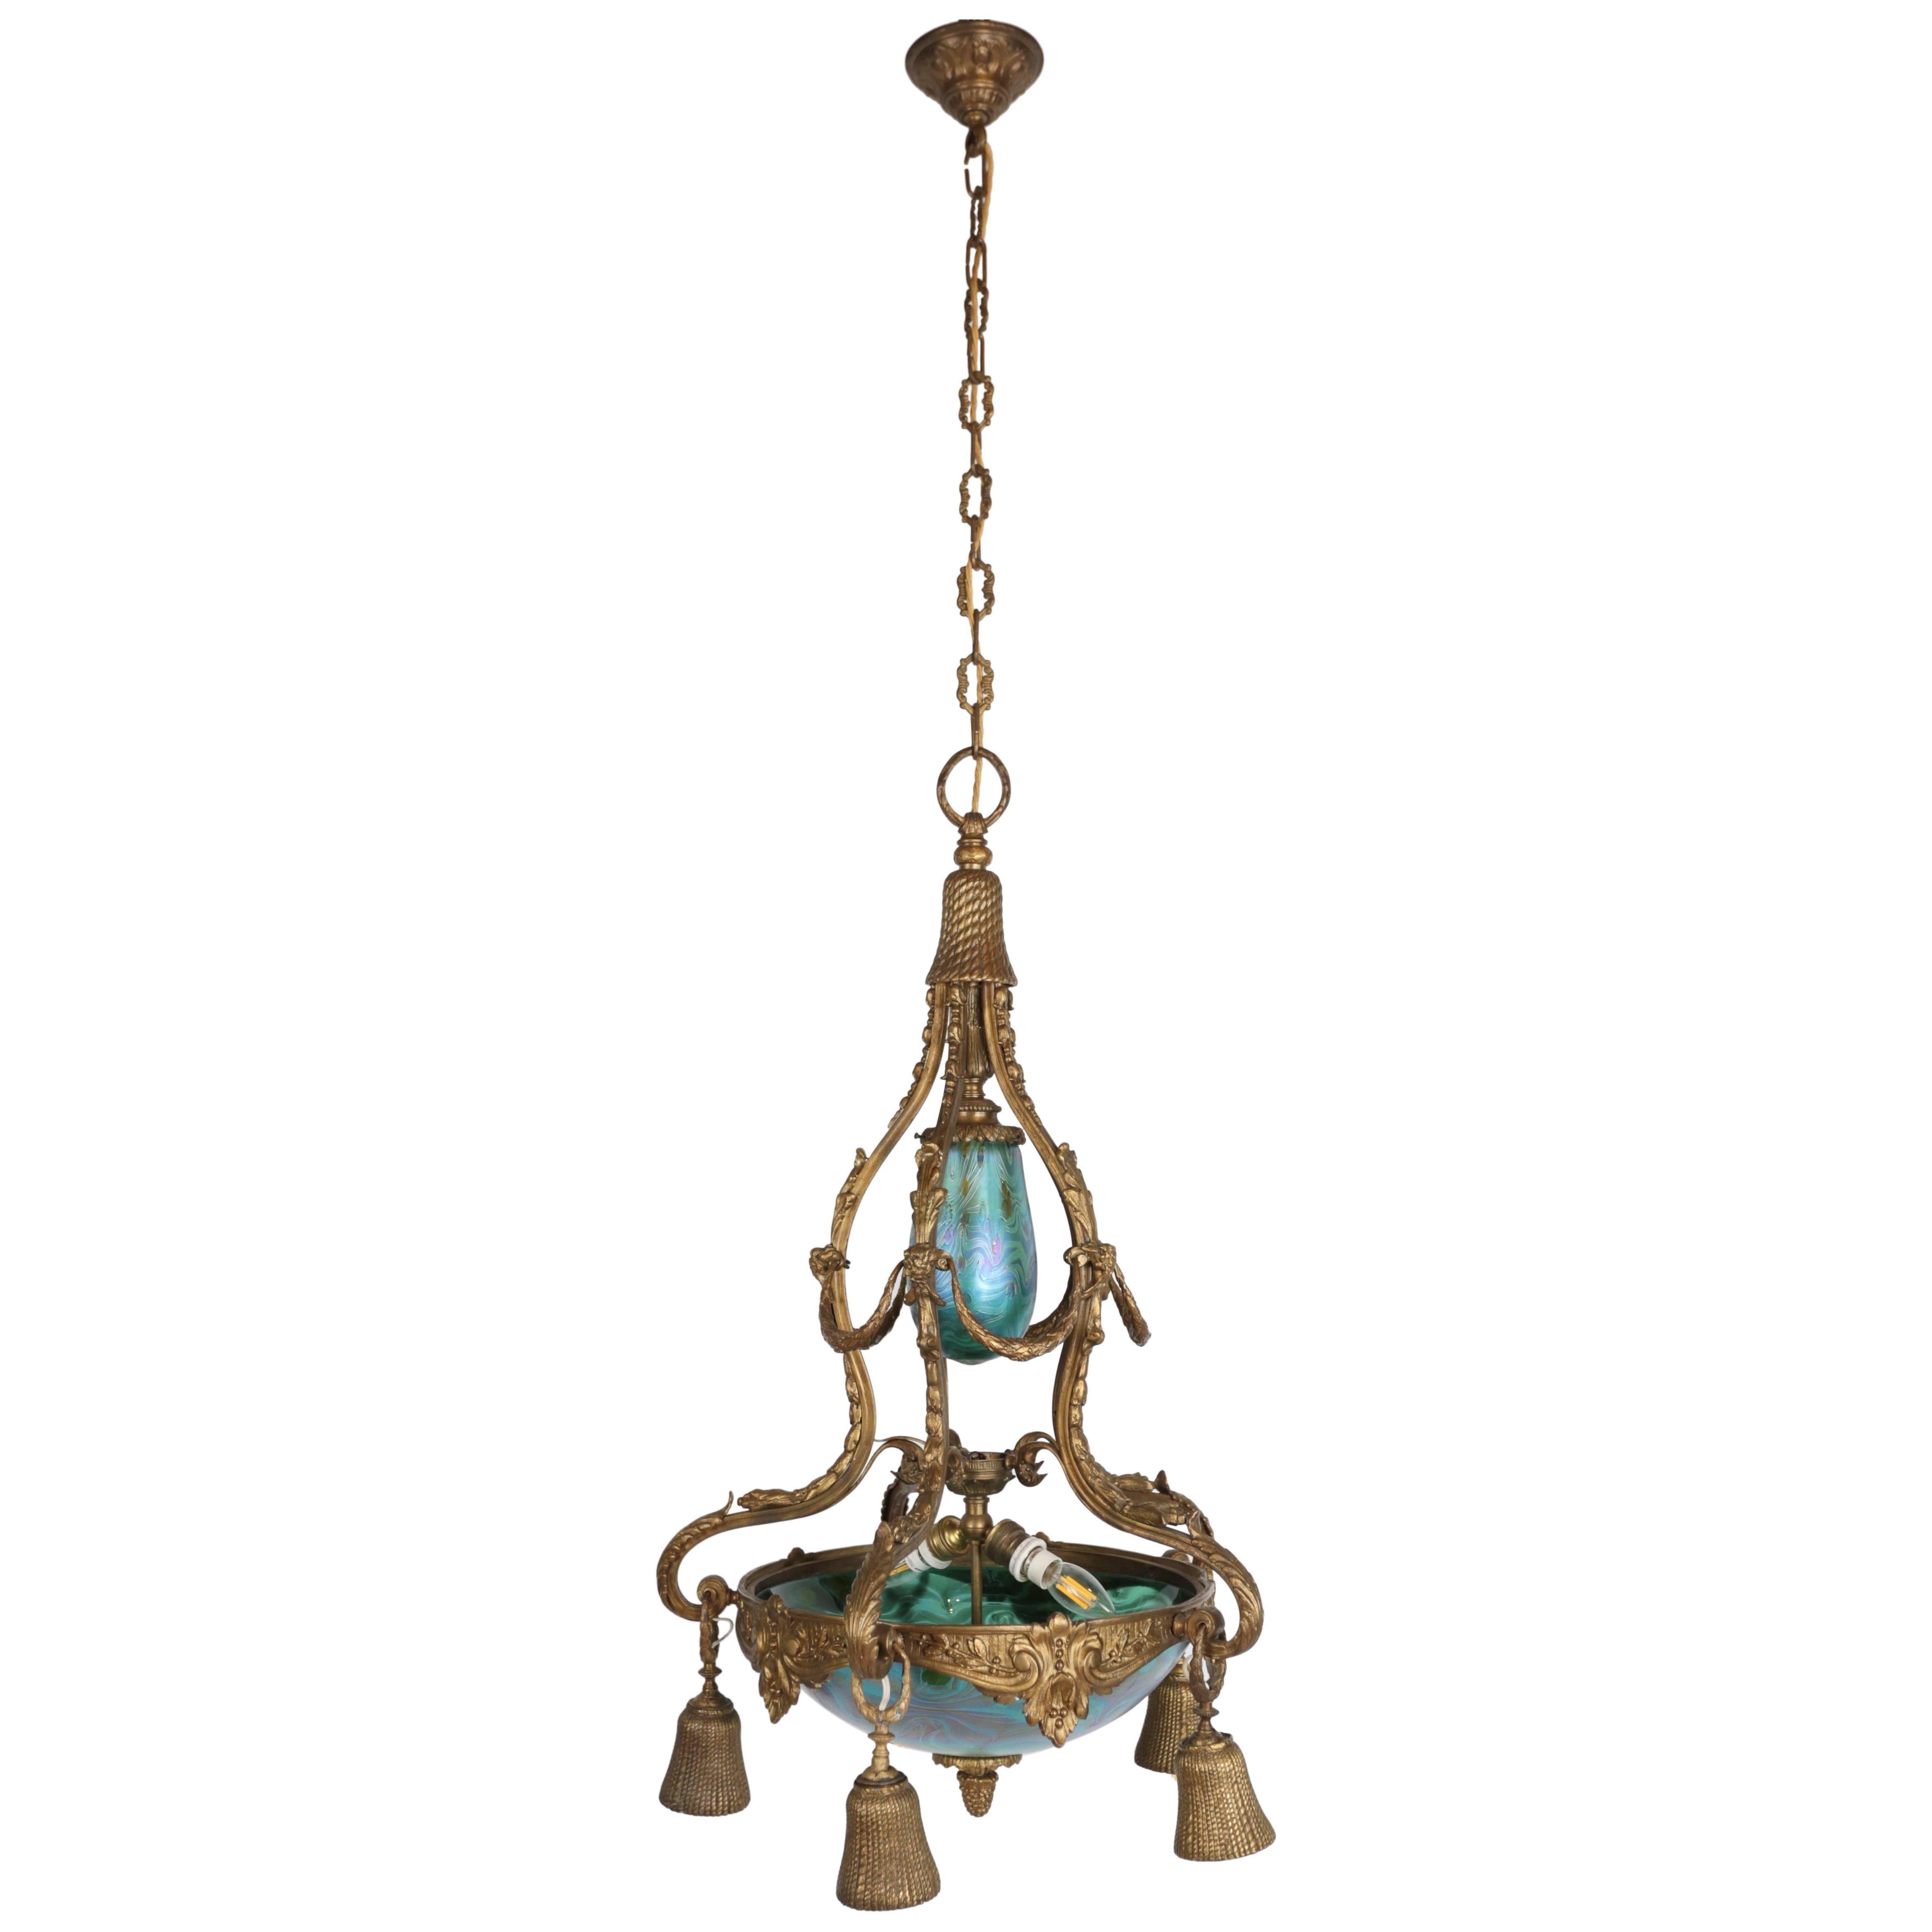 Art Nouveau bronze chandelier with iridescent glass shades